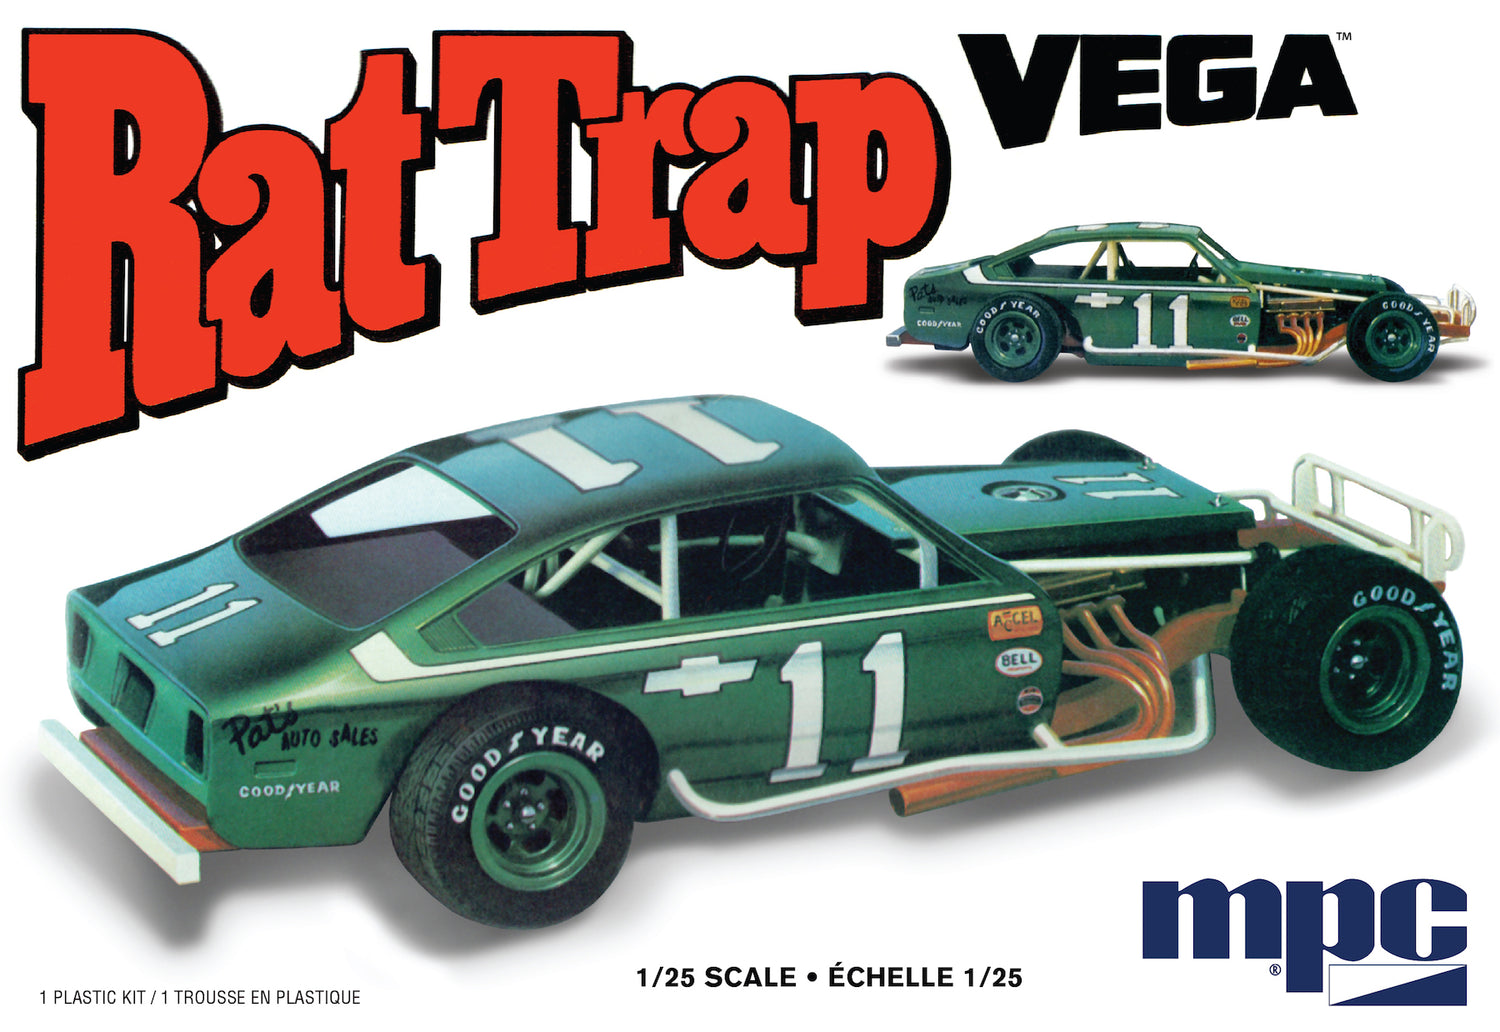 MPC 1974 Chevy Vega Modified "Rat Trap" 1:25 Scale Model Kit